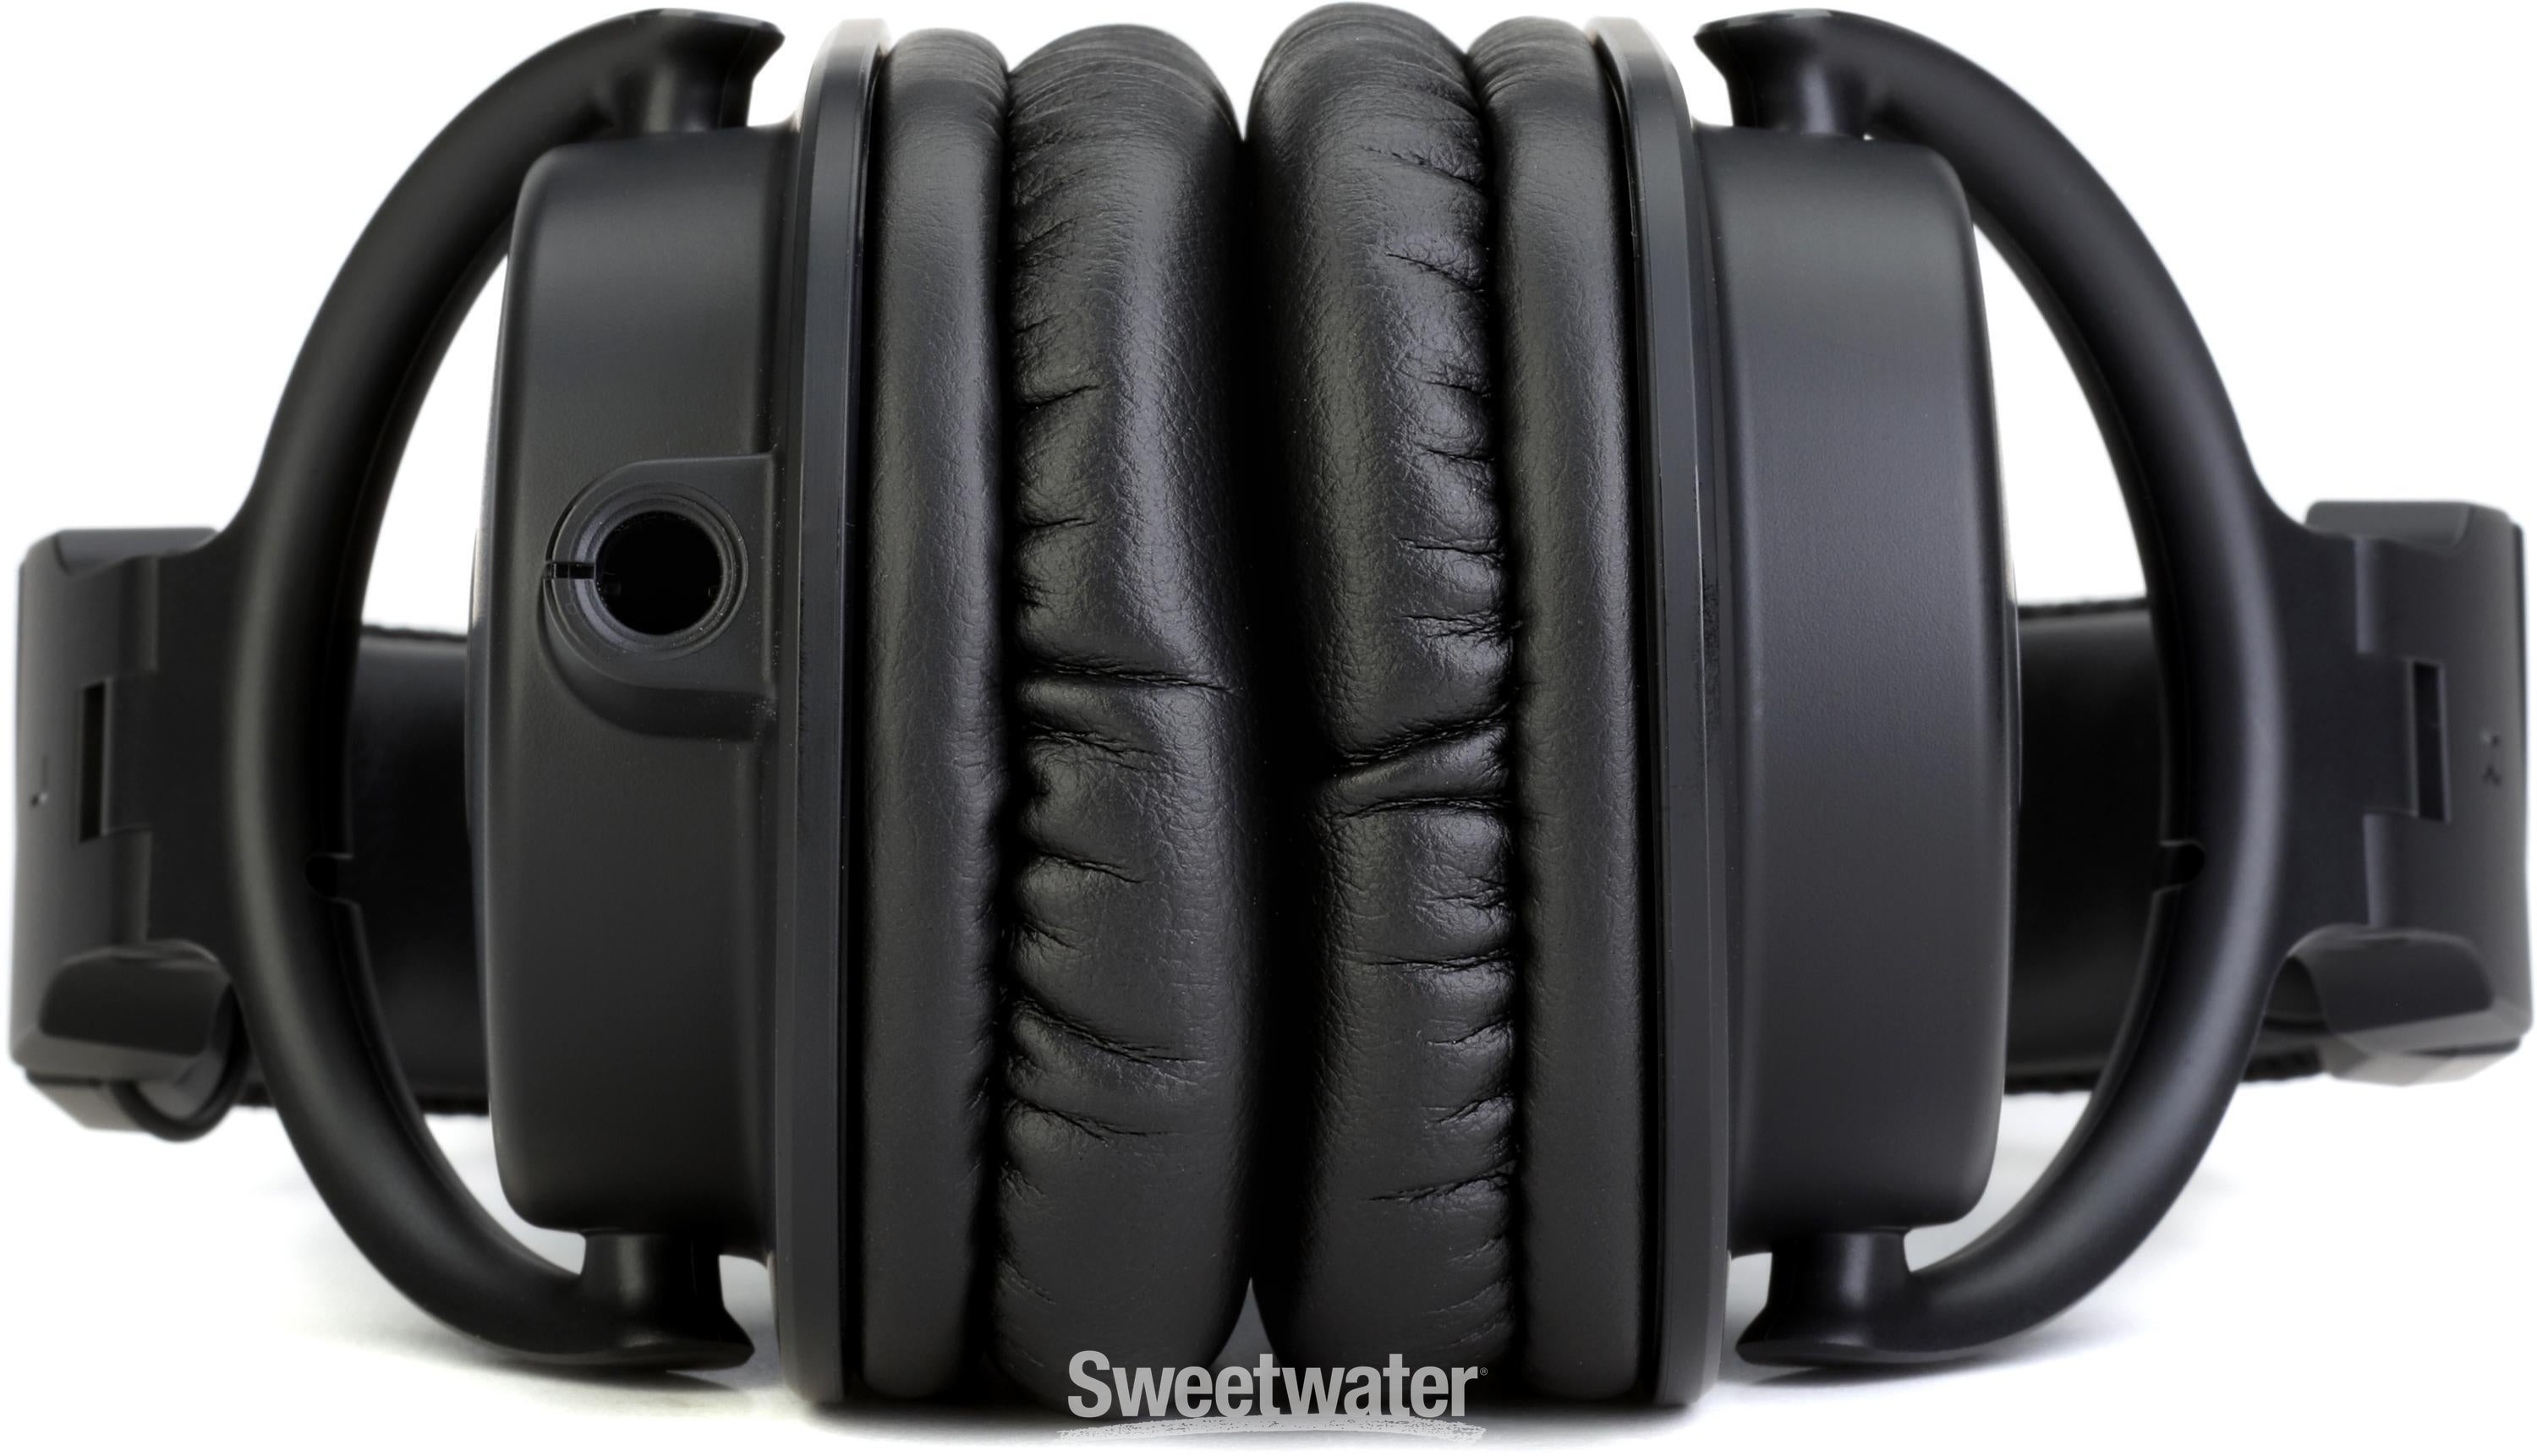 Yamaha HPH-MT5 Over-ear Headphones - Black | Sweetwater